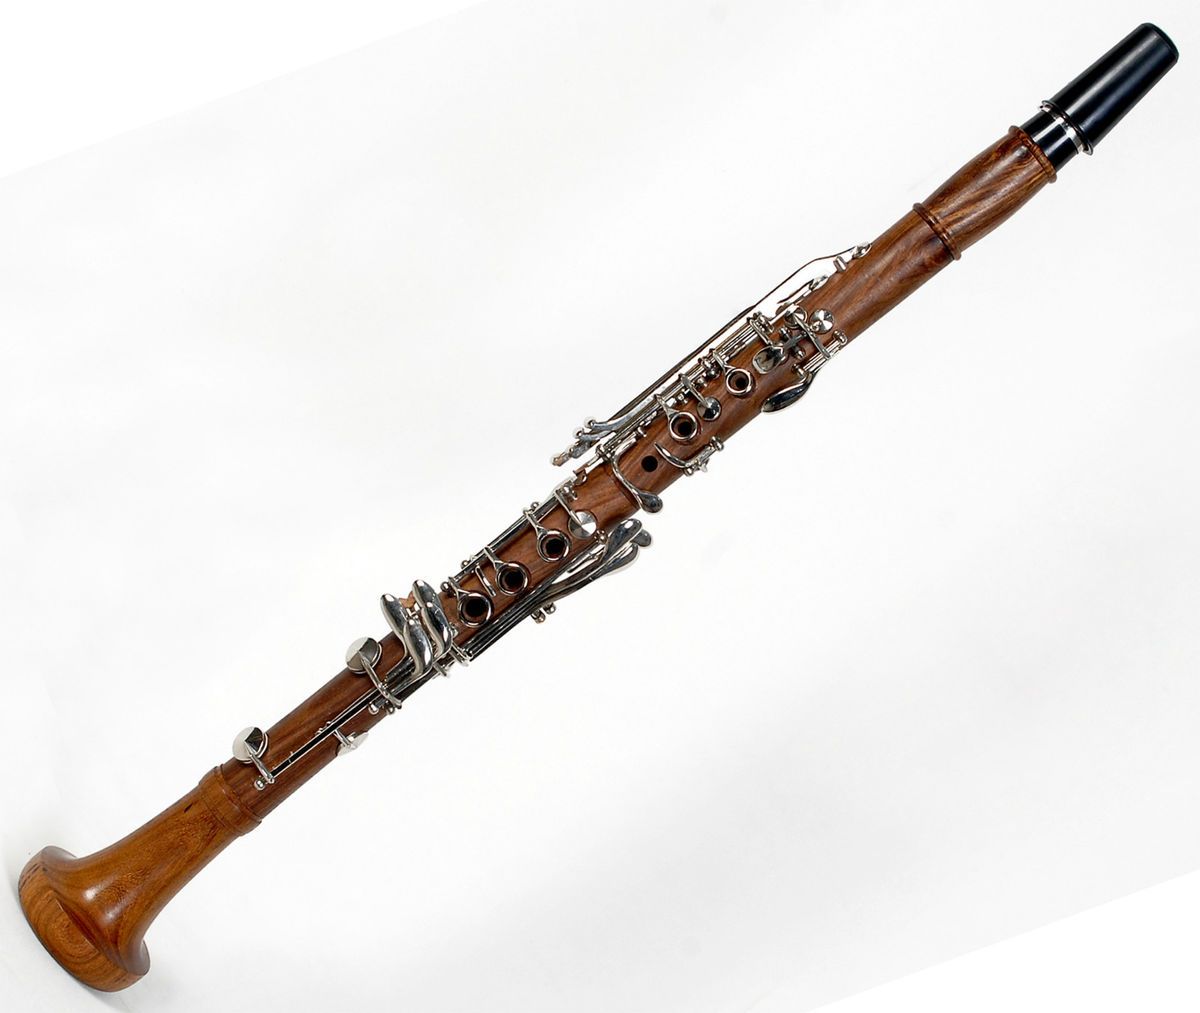 BB Clarinet Clarinet in BB Key Boehm System Wooden Clarinet Barrel and